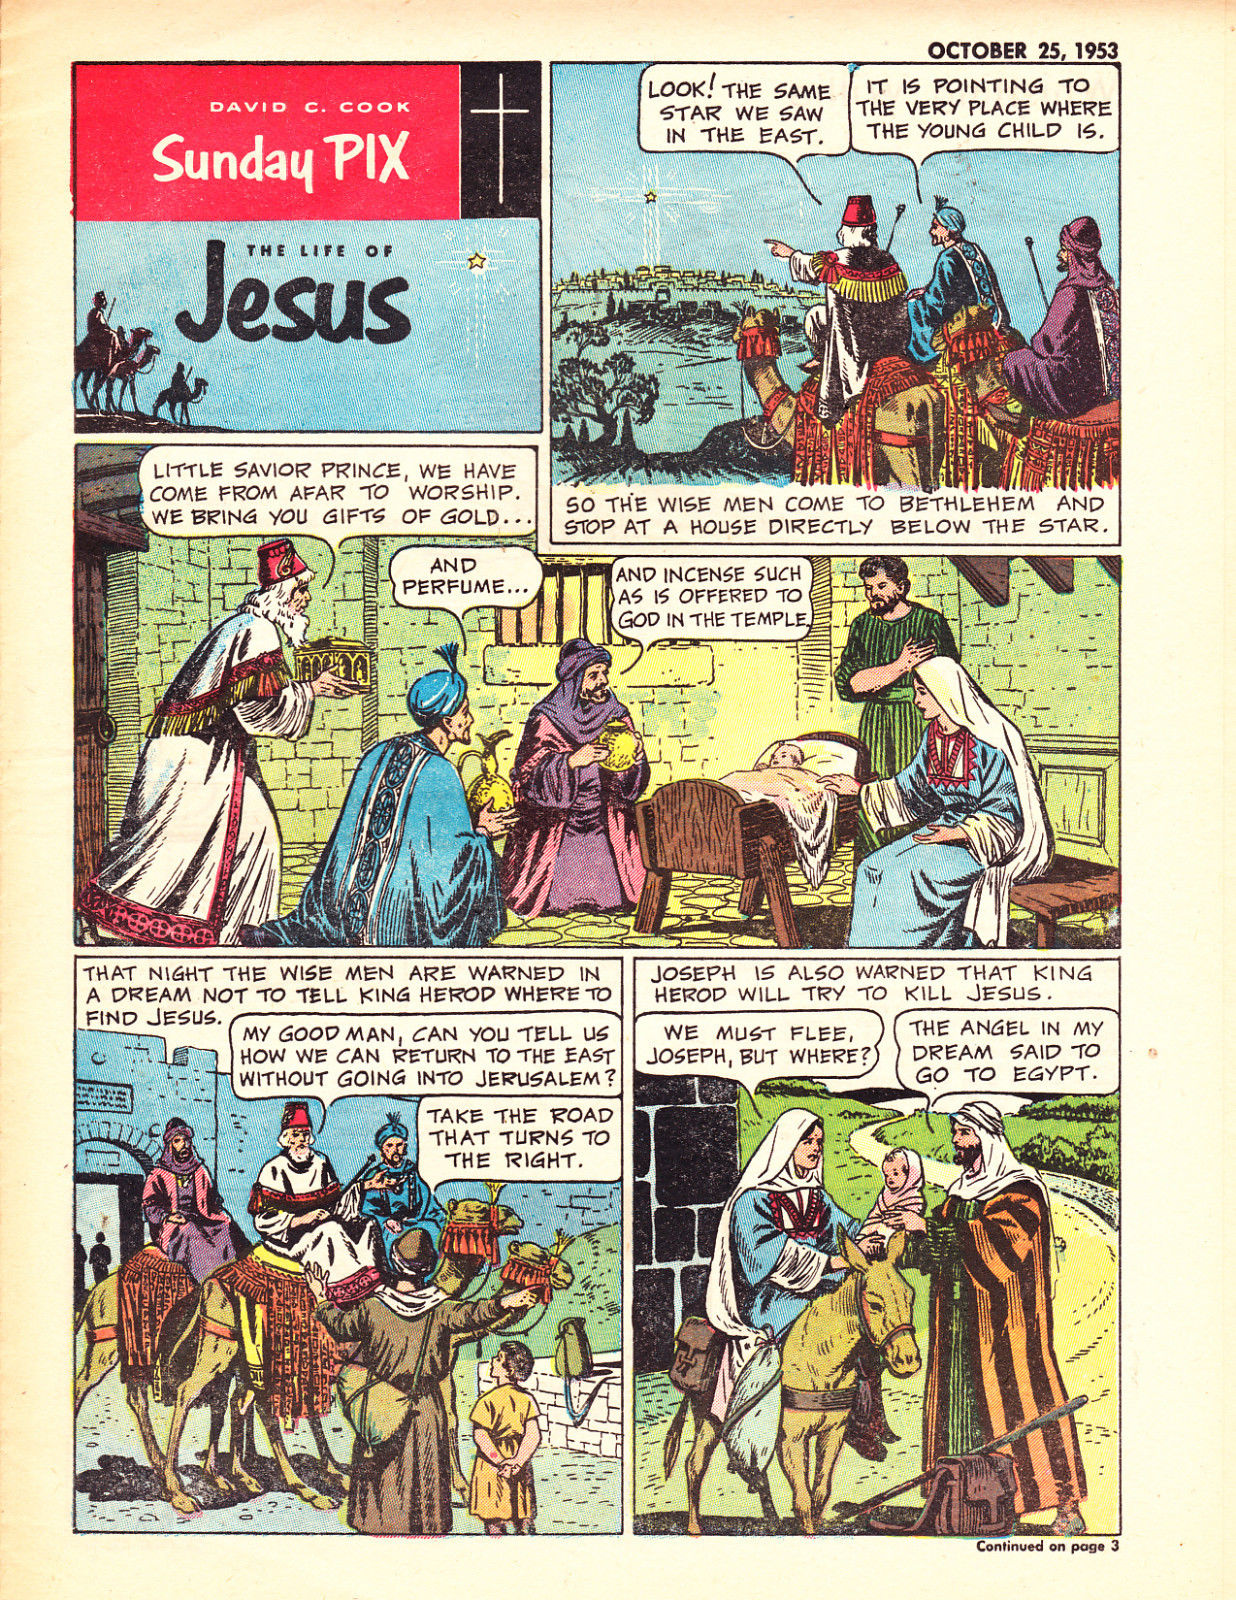 Sunday Pix Vol 5 No 43 Oct-25-53 The Life Of Jesus Cover 